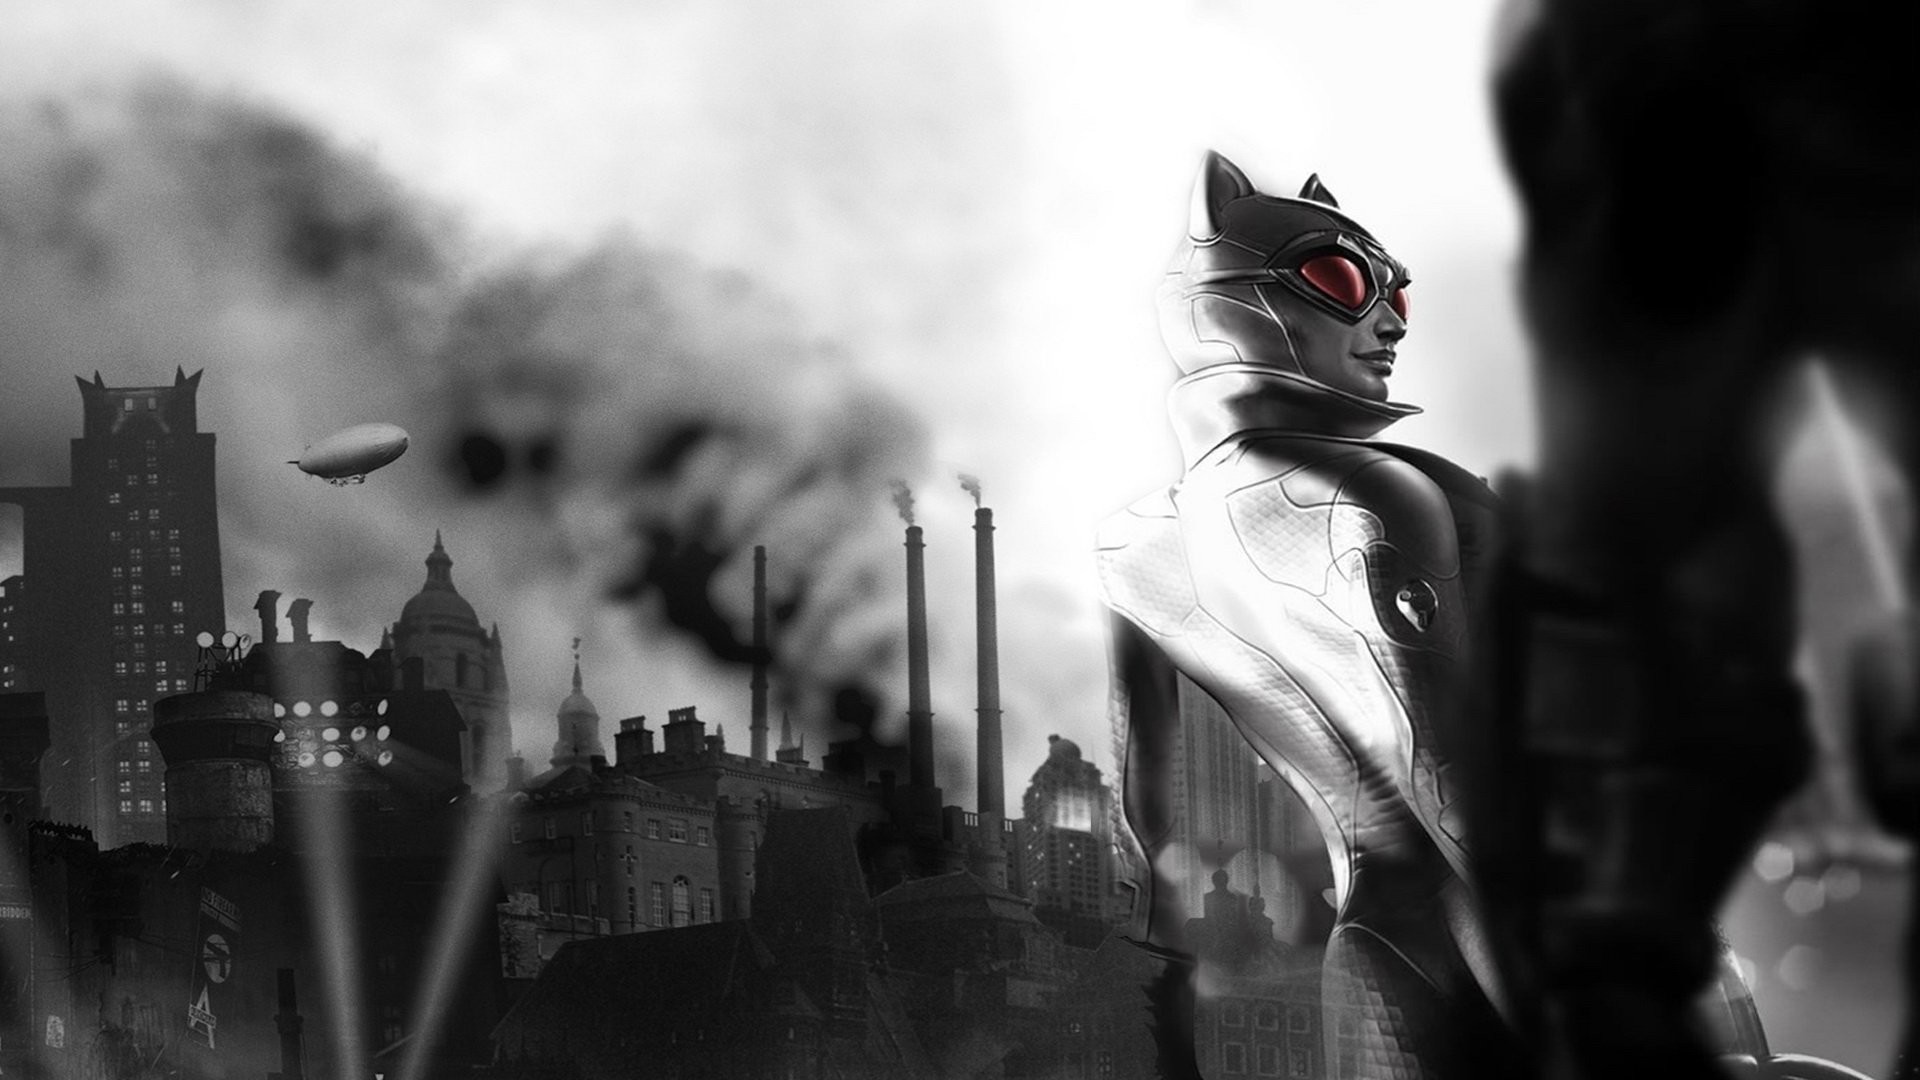 1920x1080 PreviousNext. Previous Image Next Image. batman batman arkham city catwoman  hd wallpaper desktop background